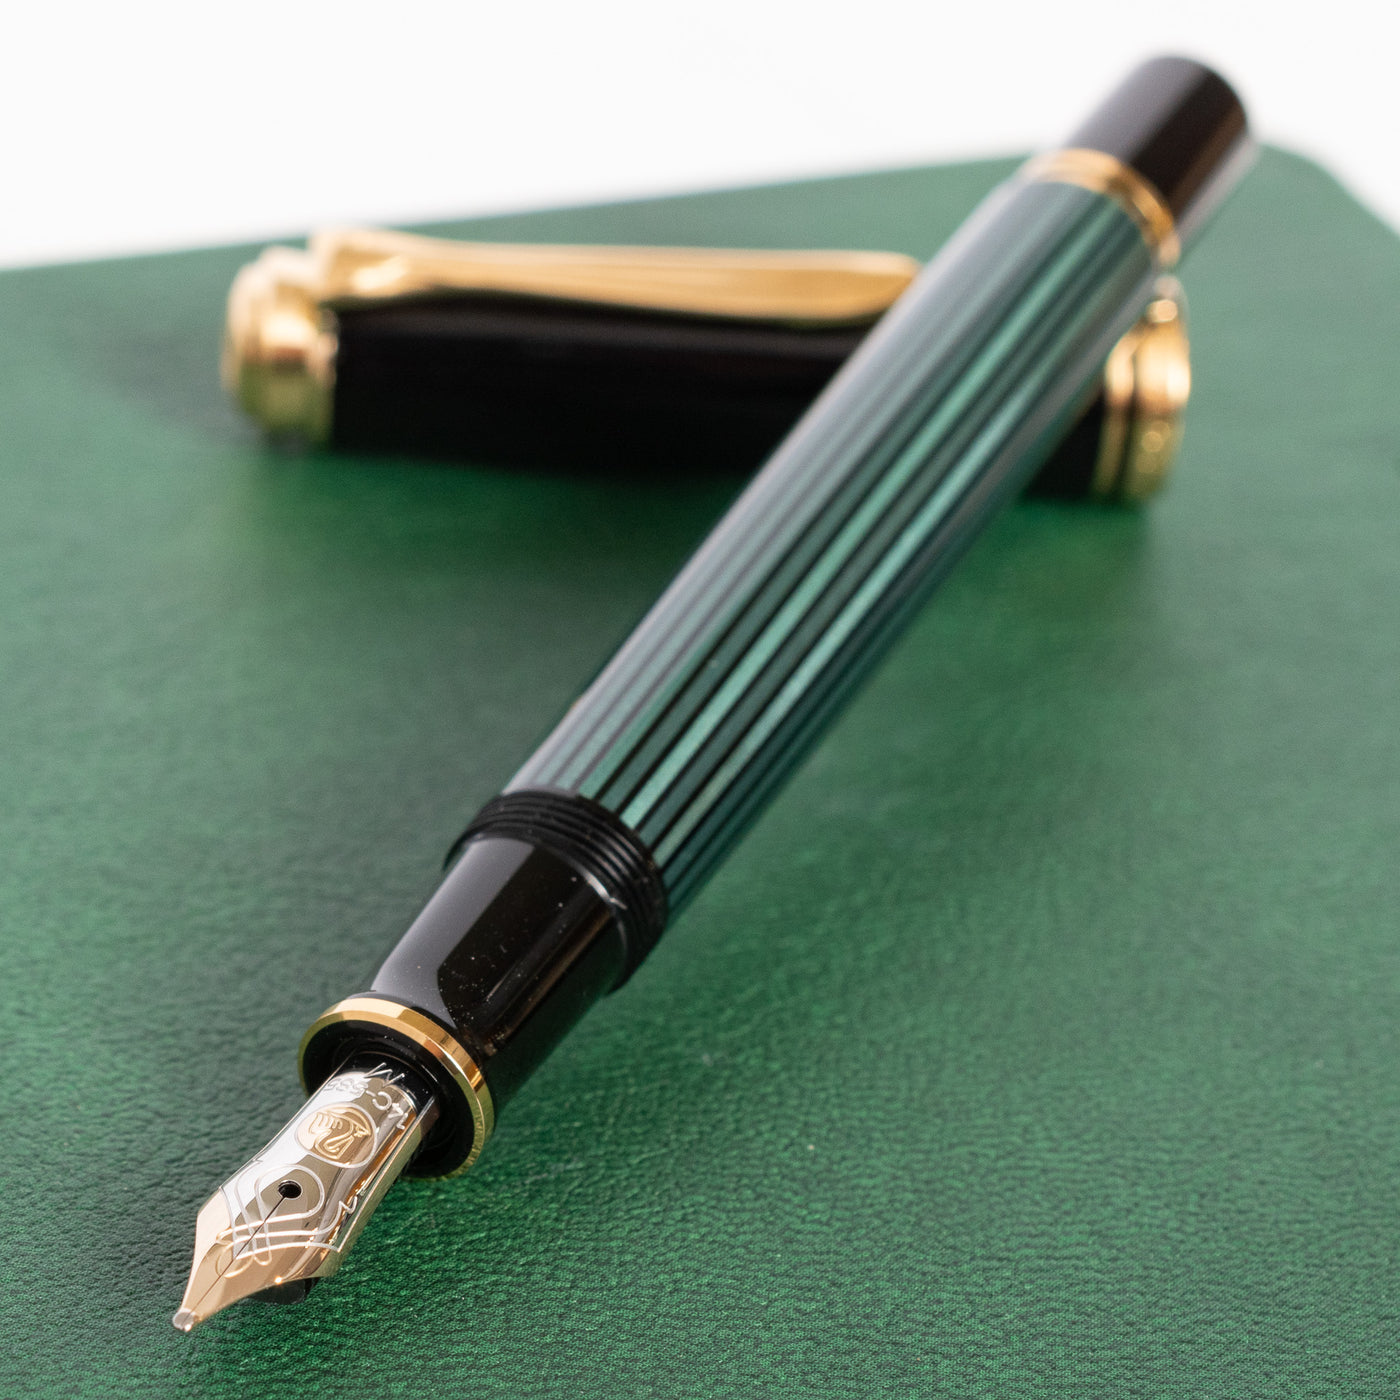 Pelikan Souveran M400 Black & Green Fountain Pen Uncapped